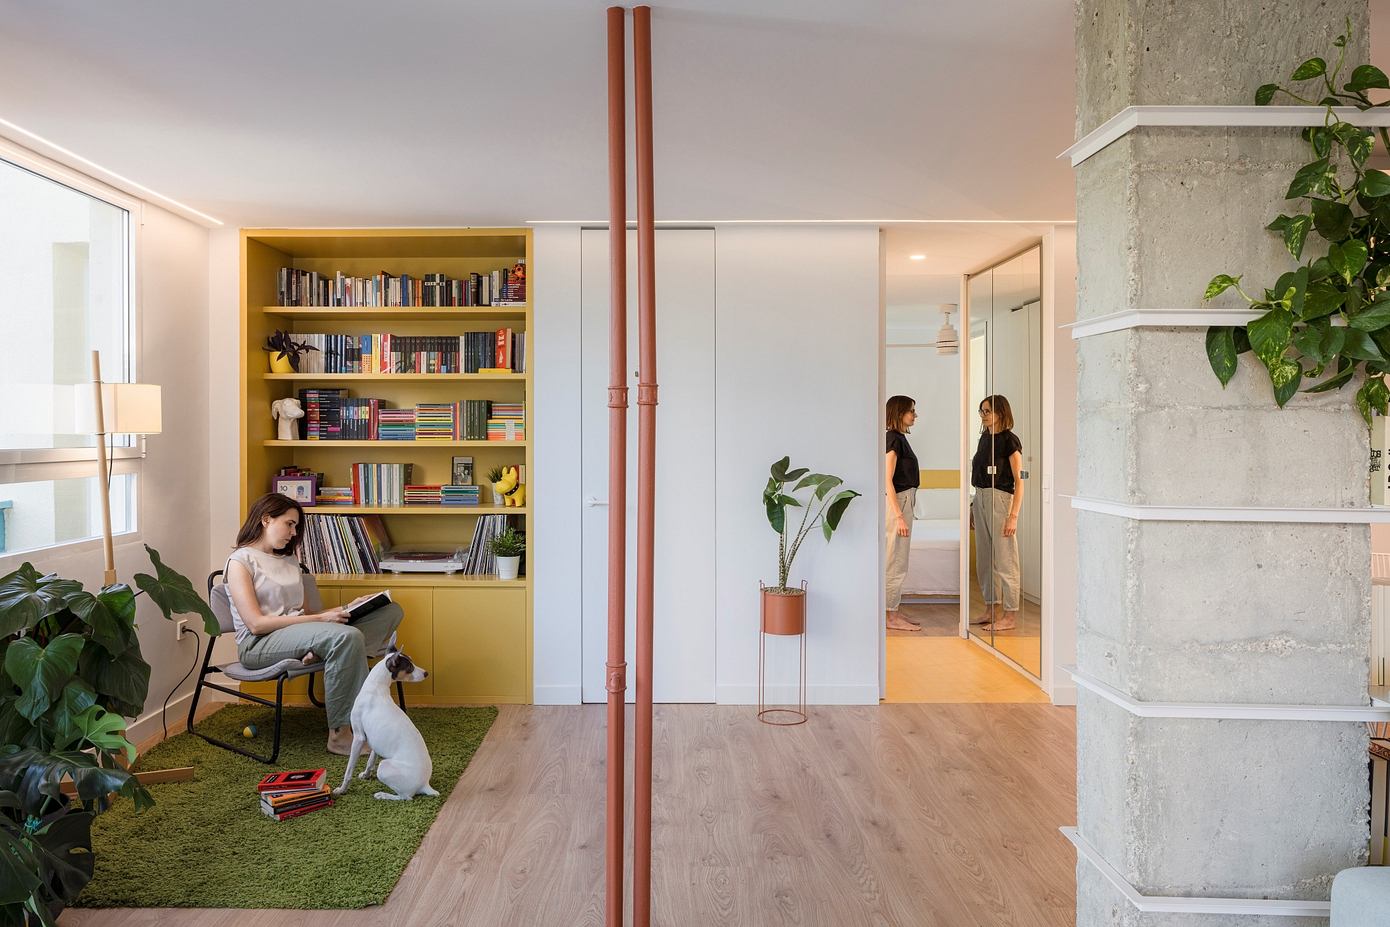 Duna Madrid Dwelling: Book-Lover’s Dream Home Design